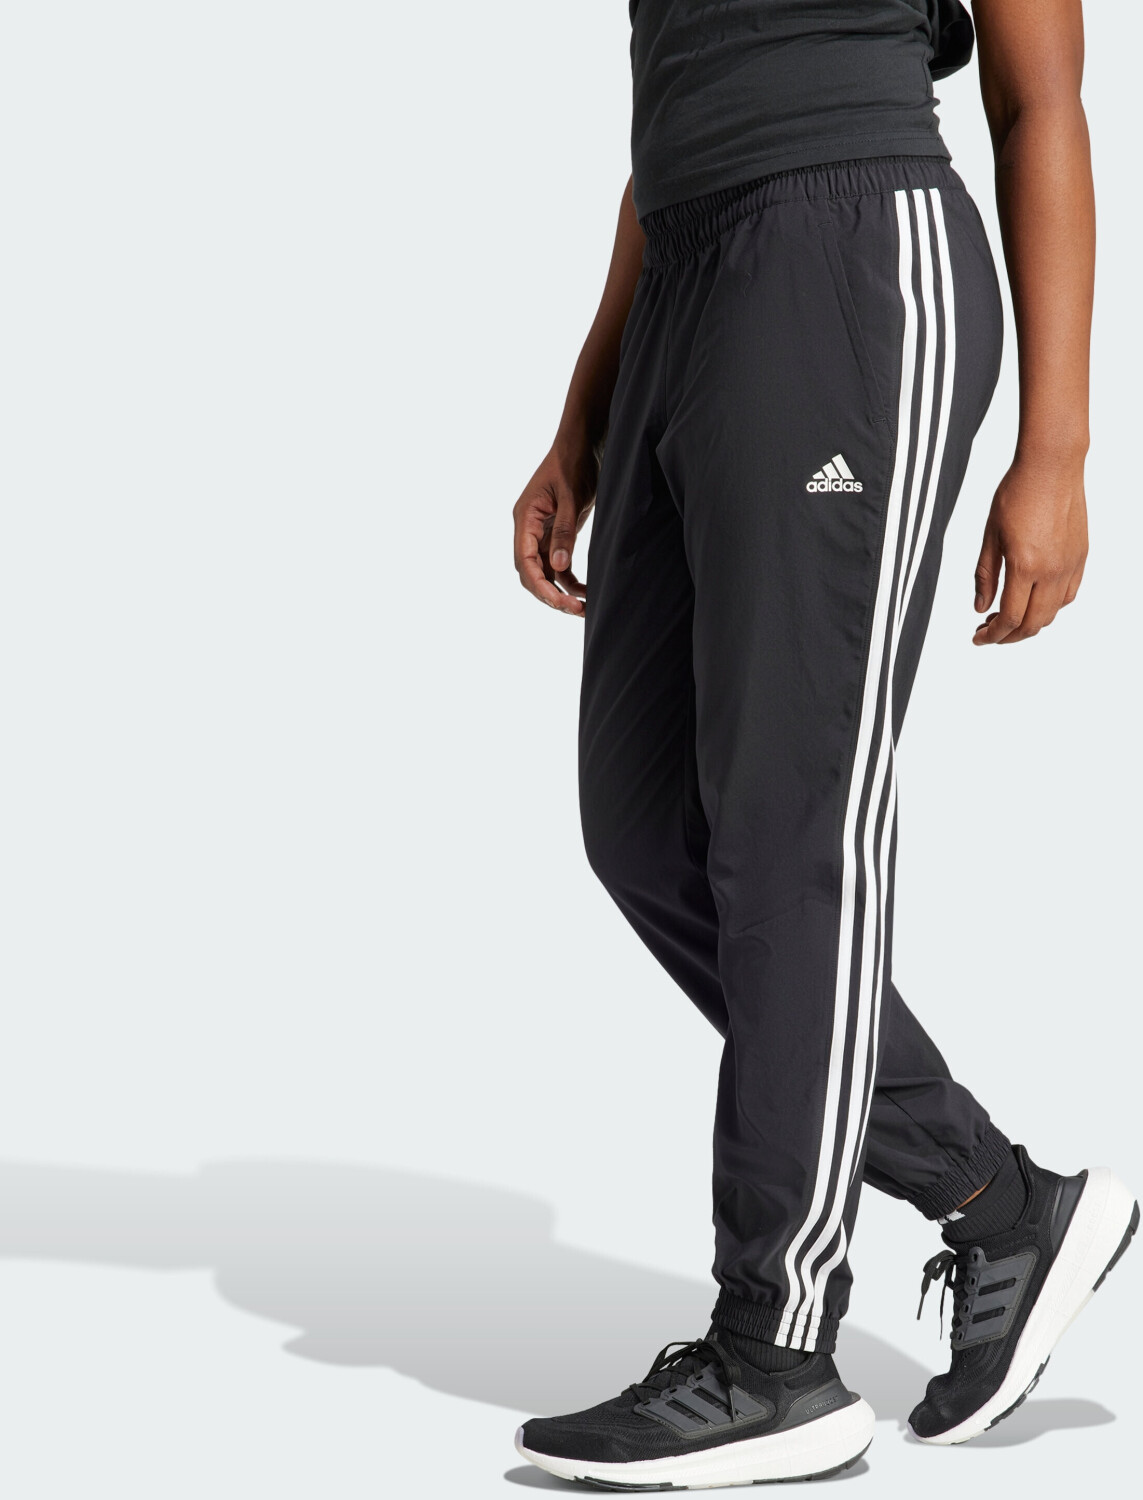 bei (H59081) Adidas Woven Woman | 3-Stripes € 37,49 ab Pants black TRAINICONS Preisvergleich